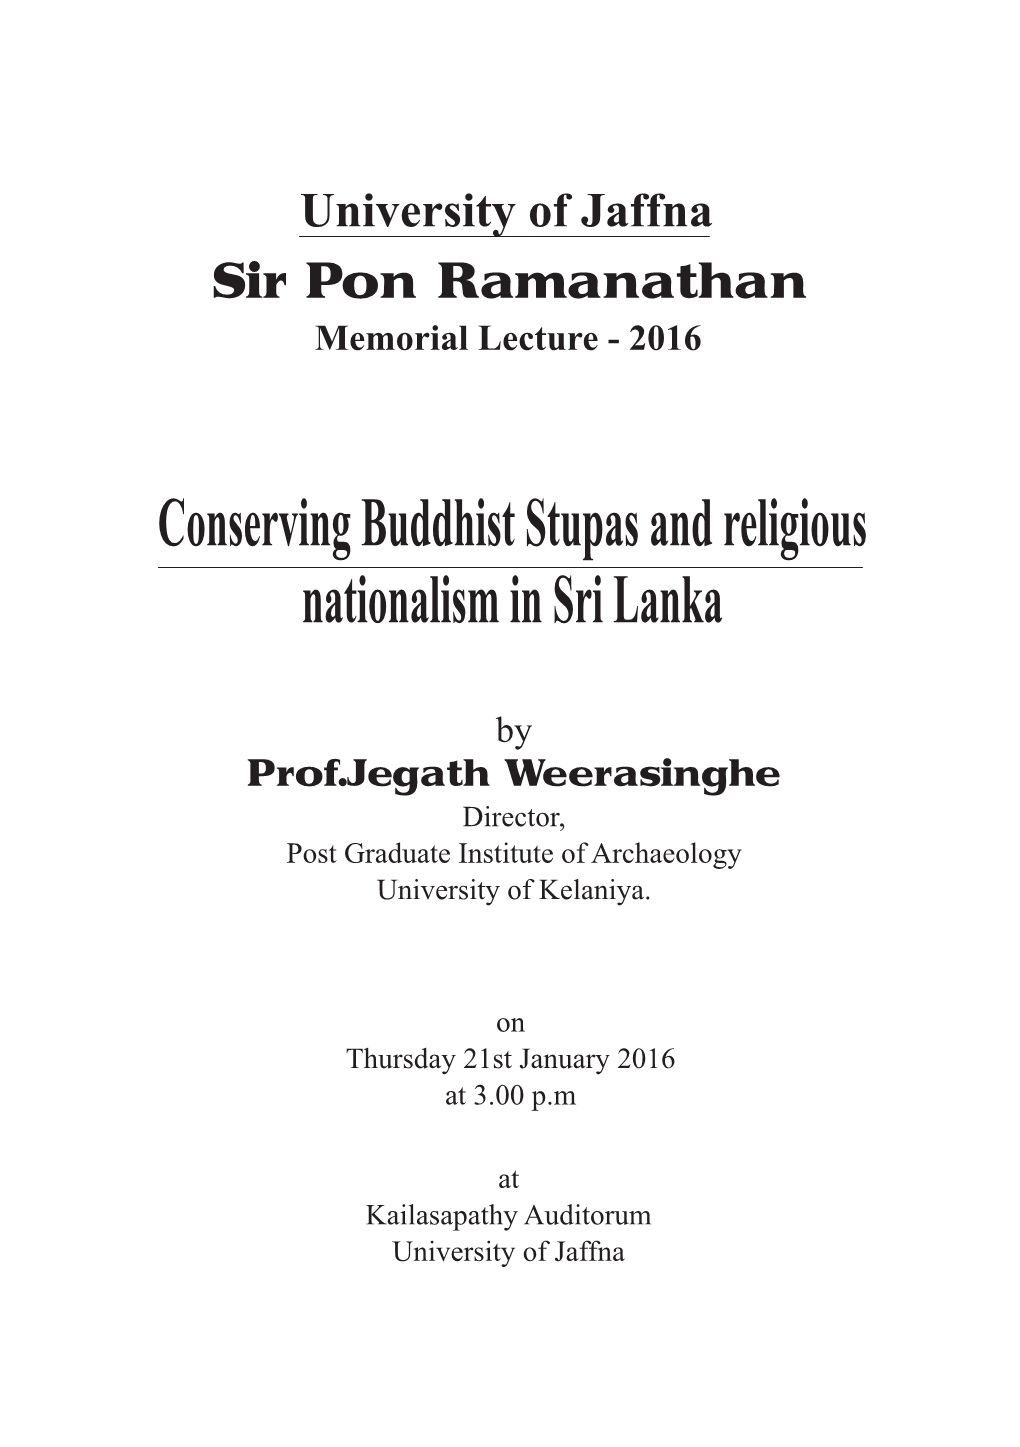 Sir Pon Ramanathan Memorial Lecture - 2016